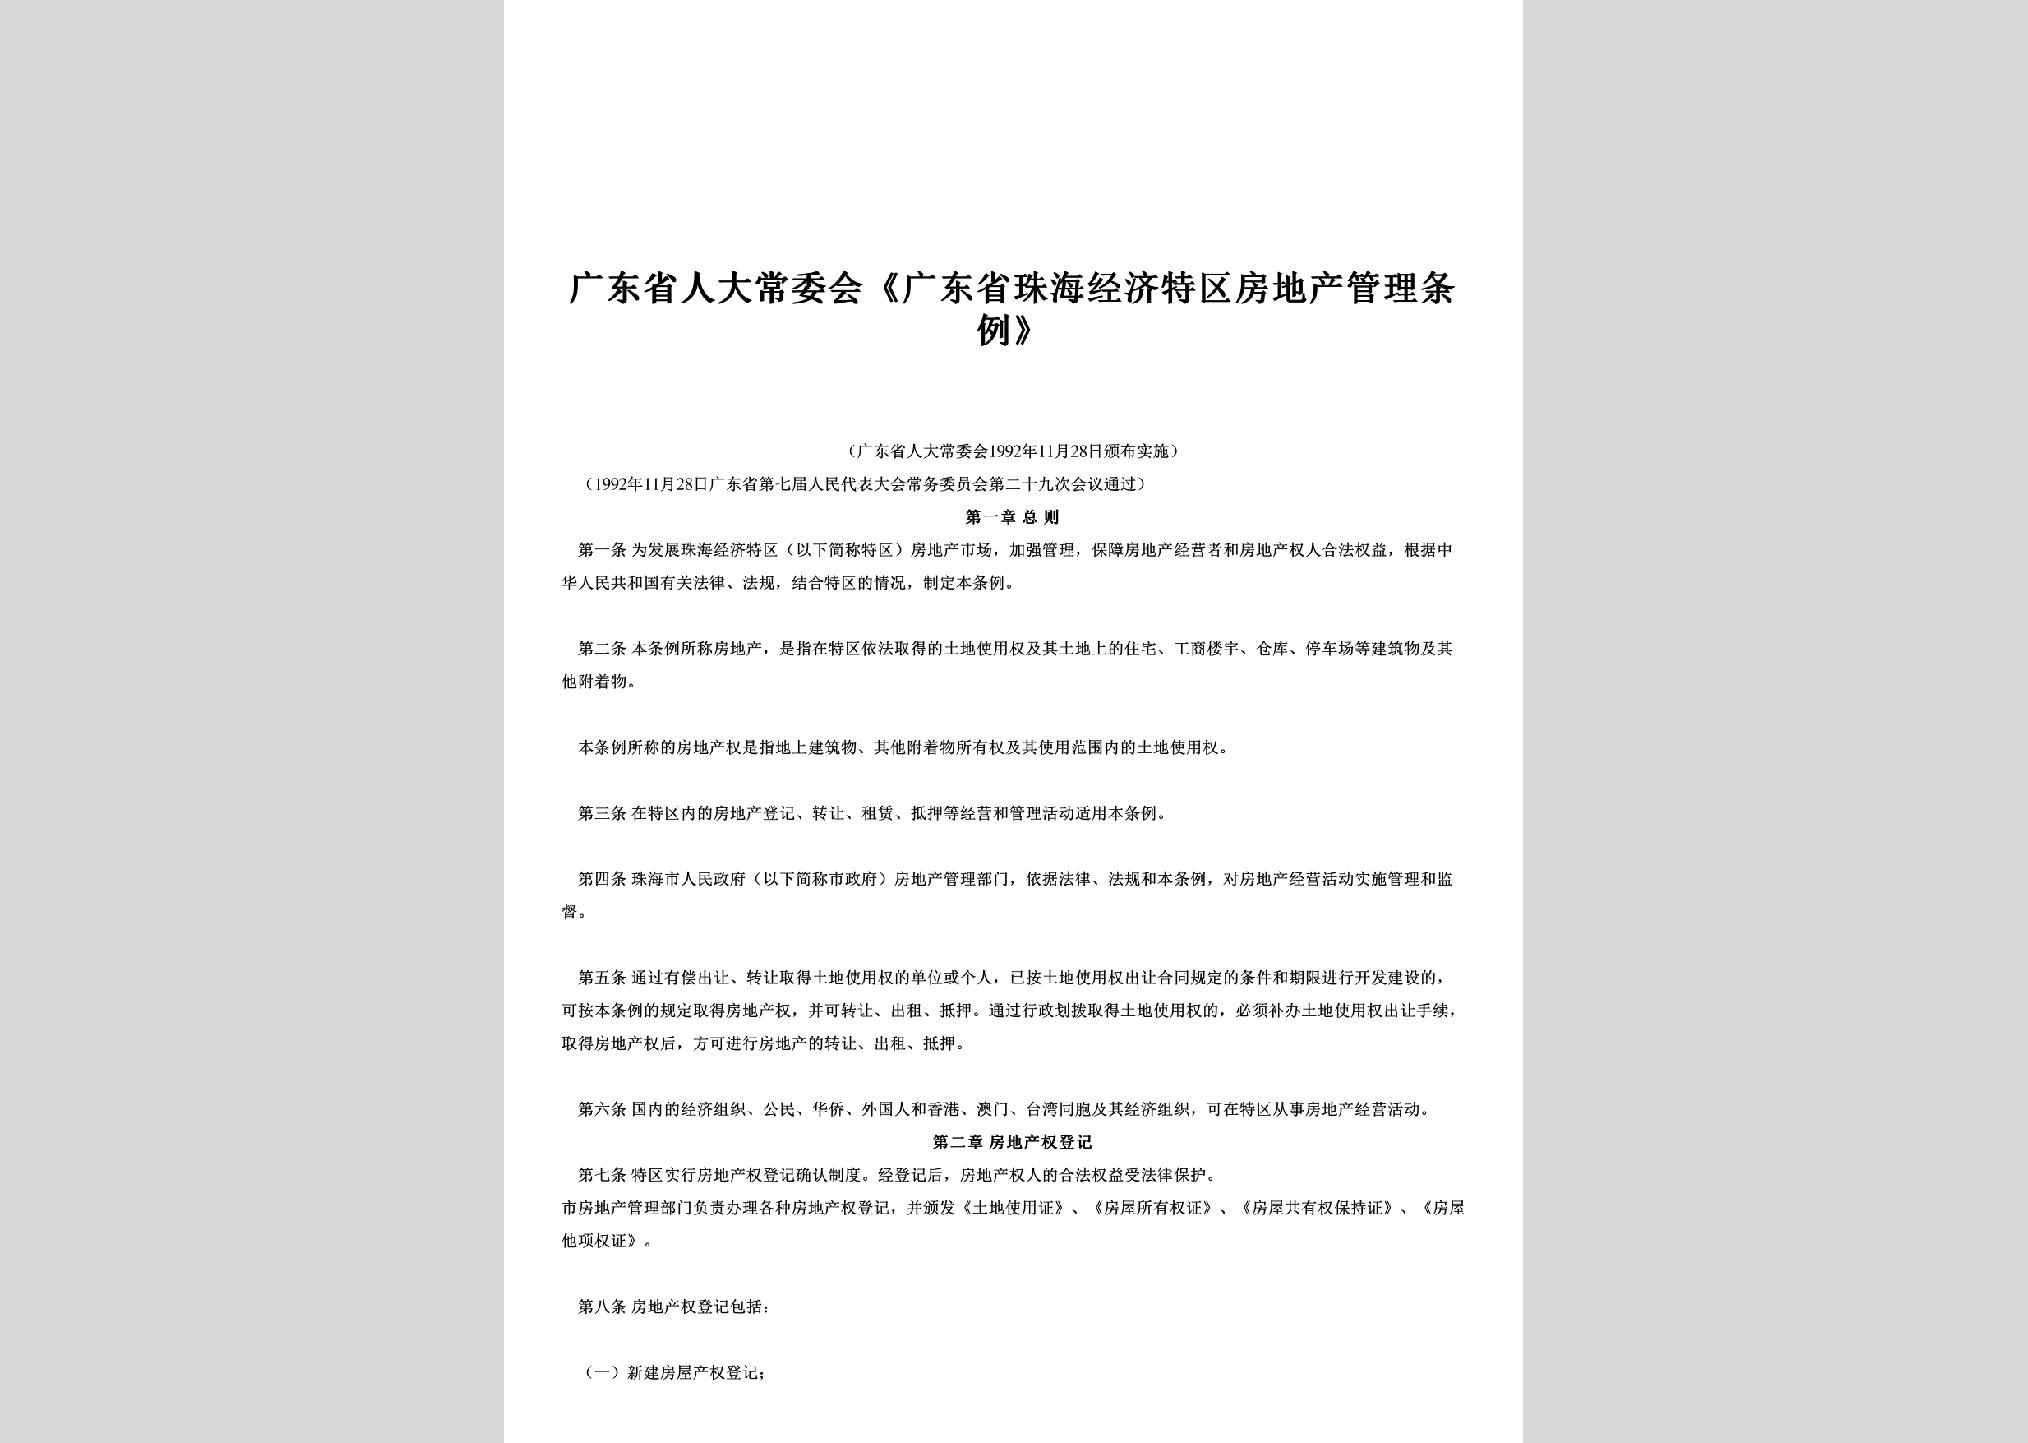 GD-ZHFCGLTL-1992：《广东省珠海经济特区房地产管理条例》